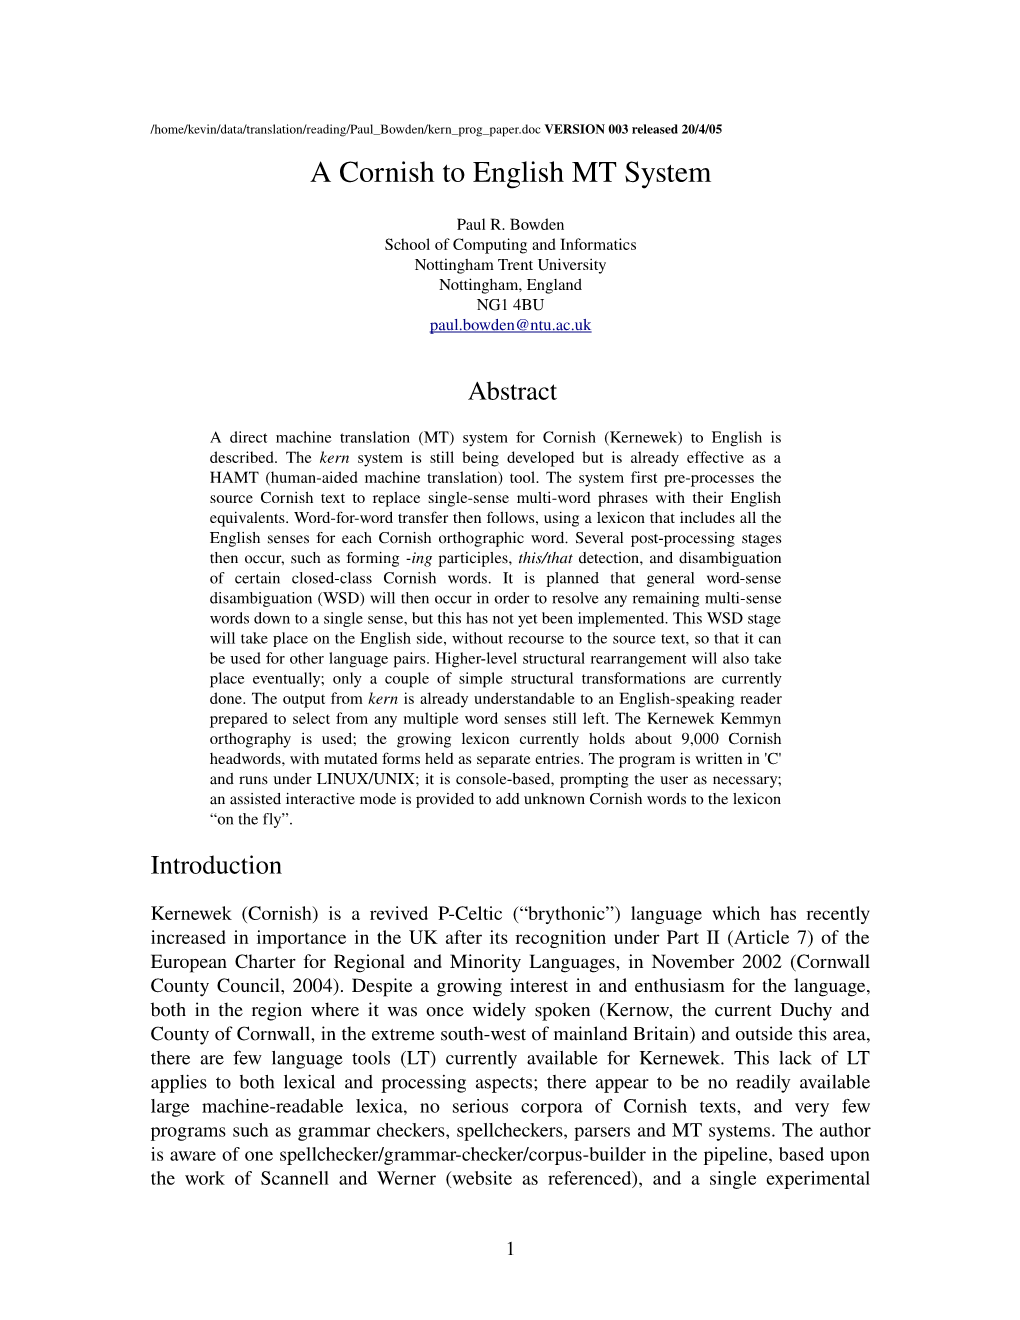 A Cornish to English MT System